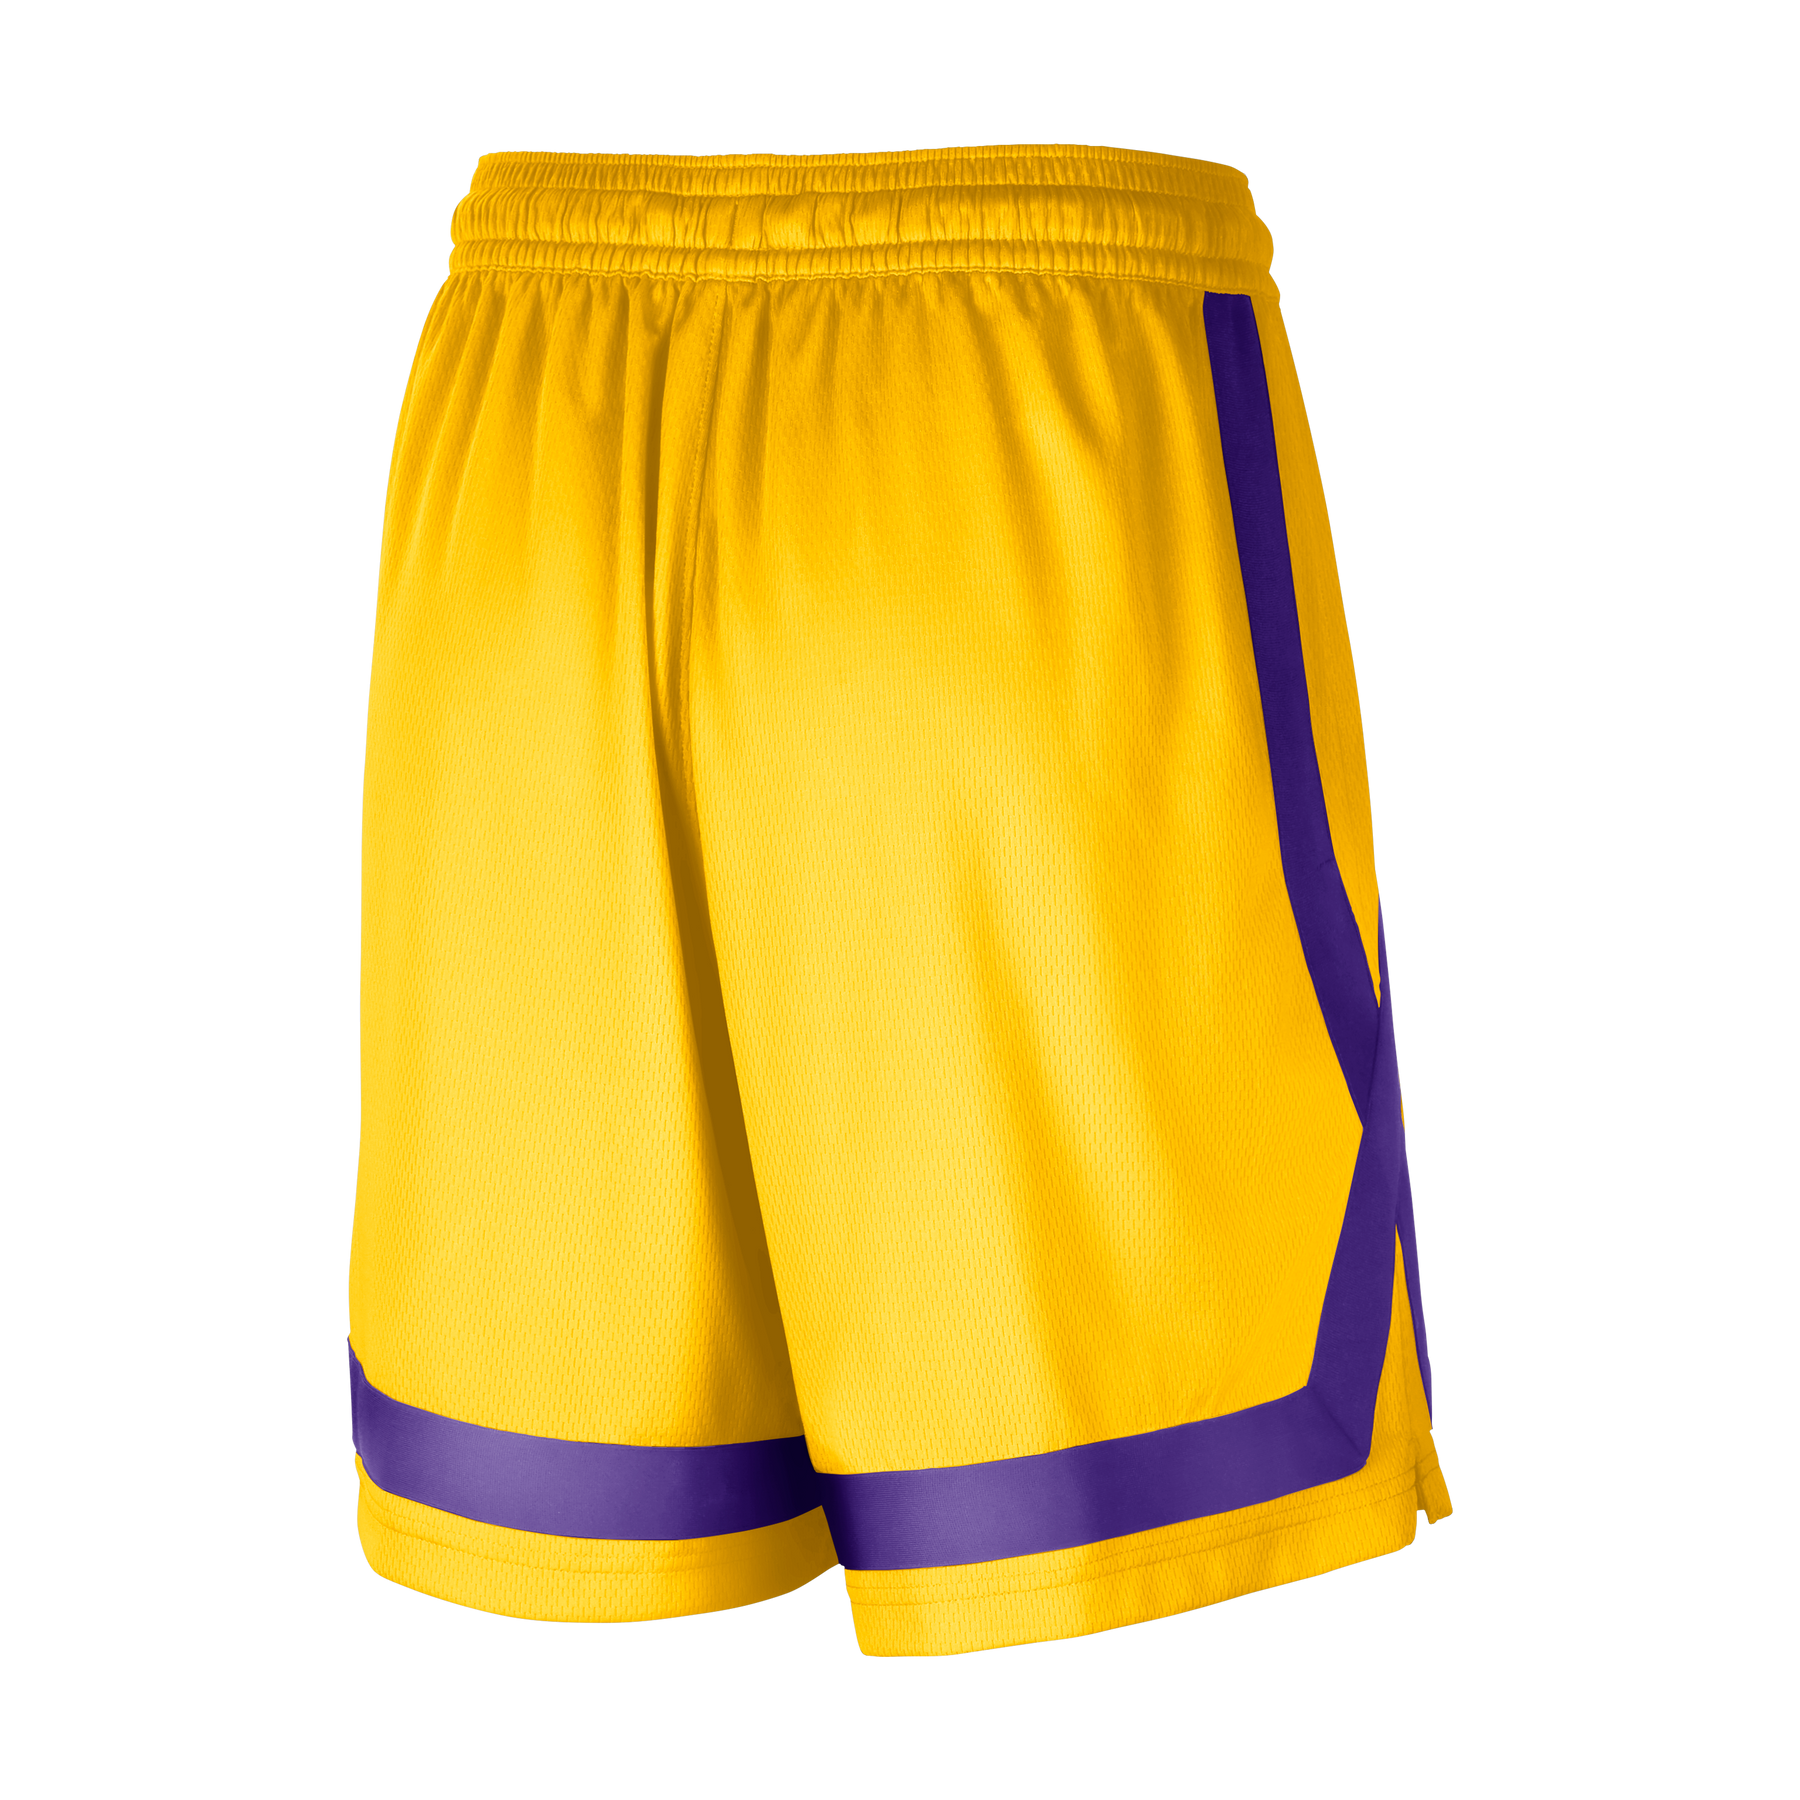 NBA Lakers Knit Team Jersey Shirt Kids Size M 10-12 Purple Yellow Short  Sleeves